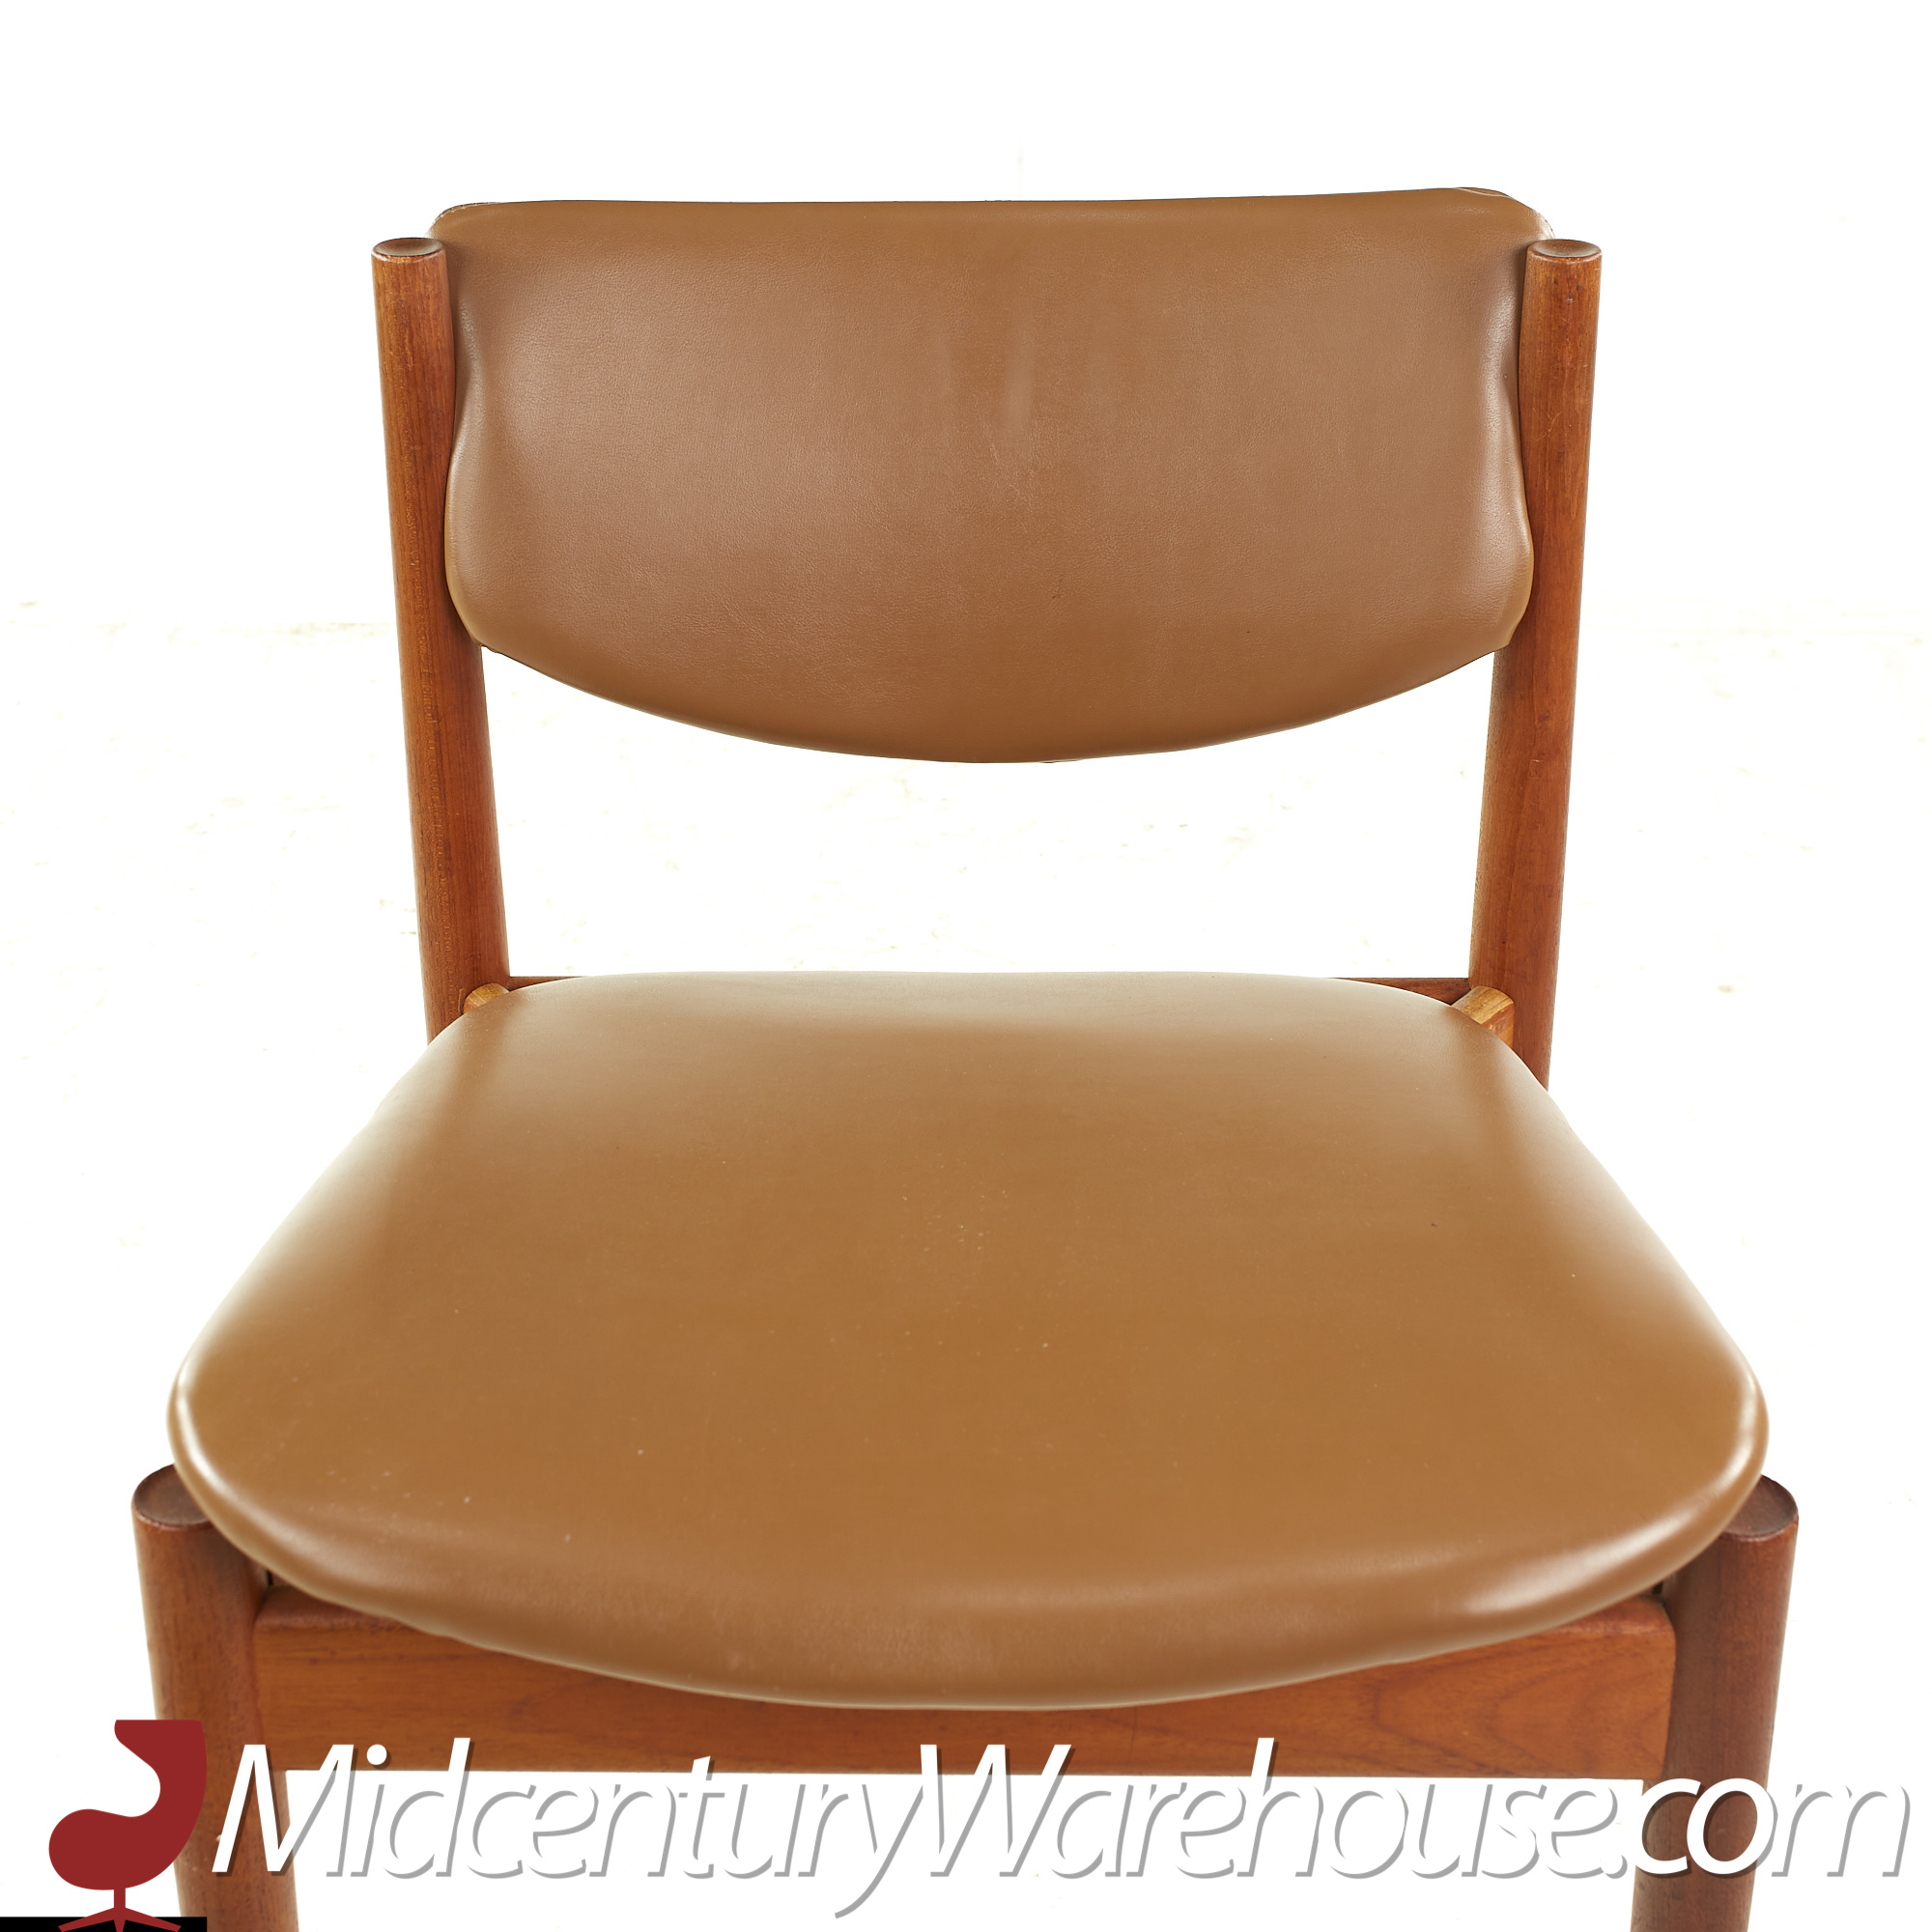 Finn Juhl for France and Son Mid Century Model 197 Teak Dining Chairs - Set of 8